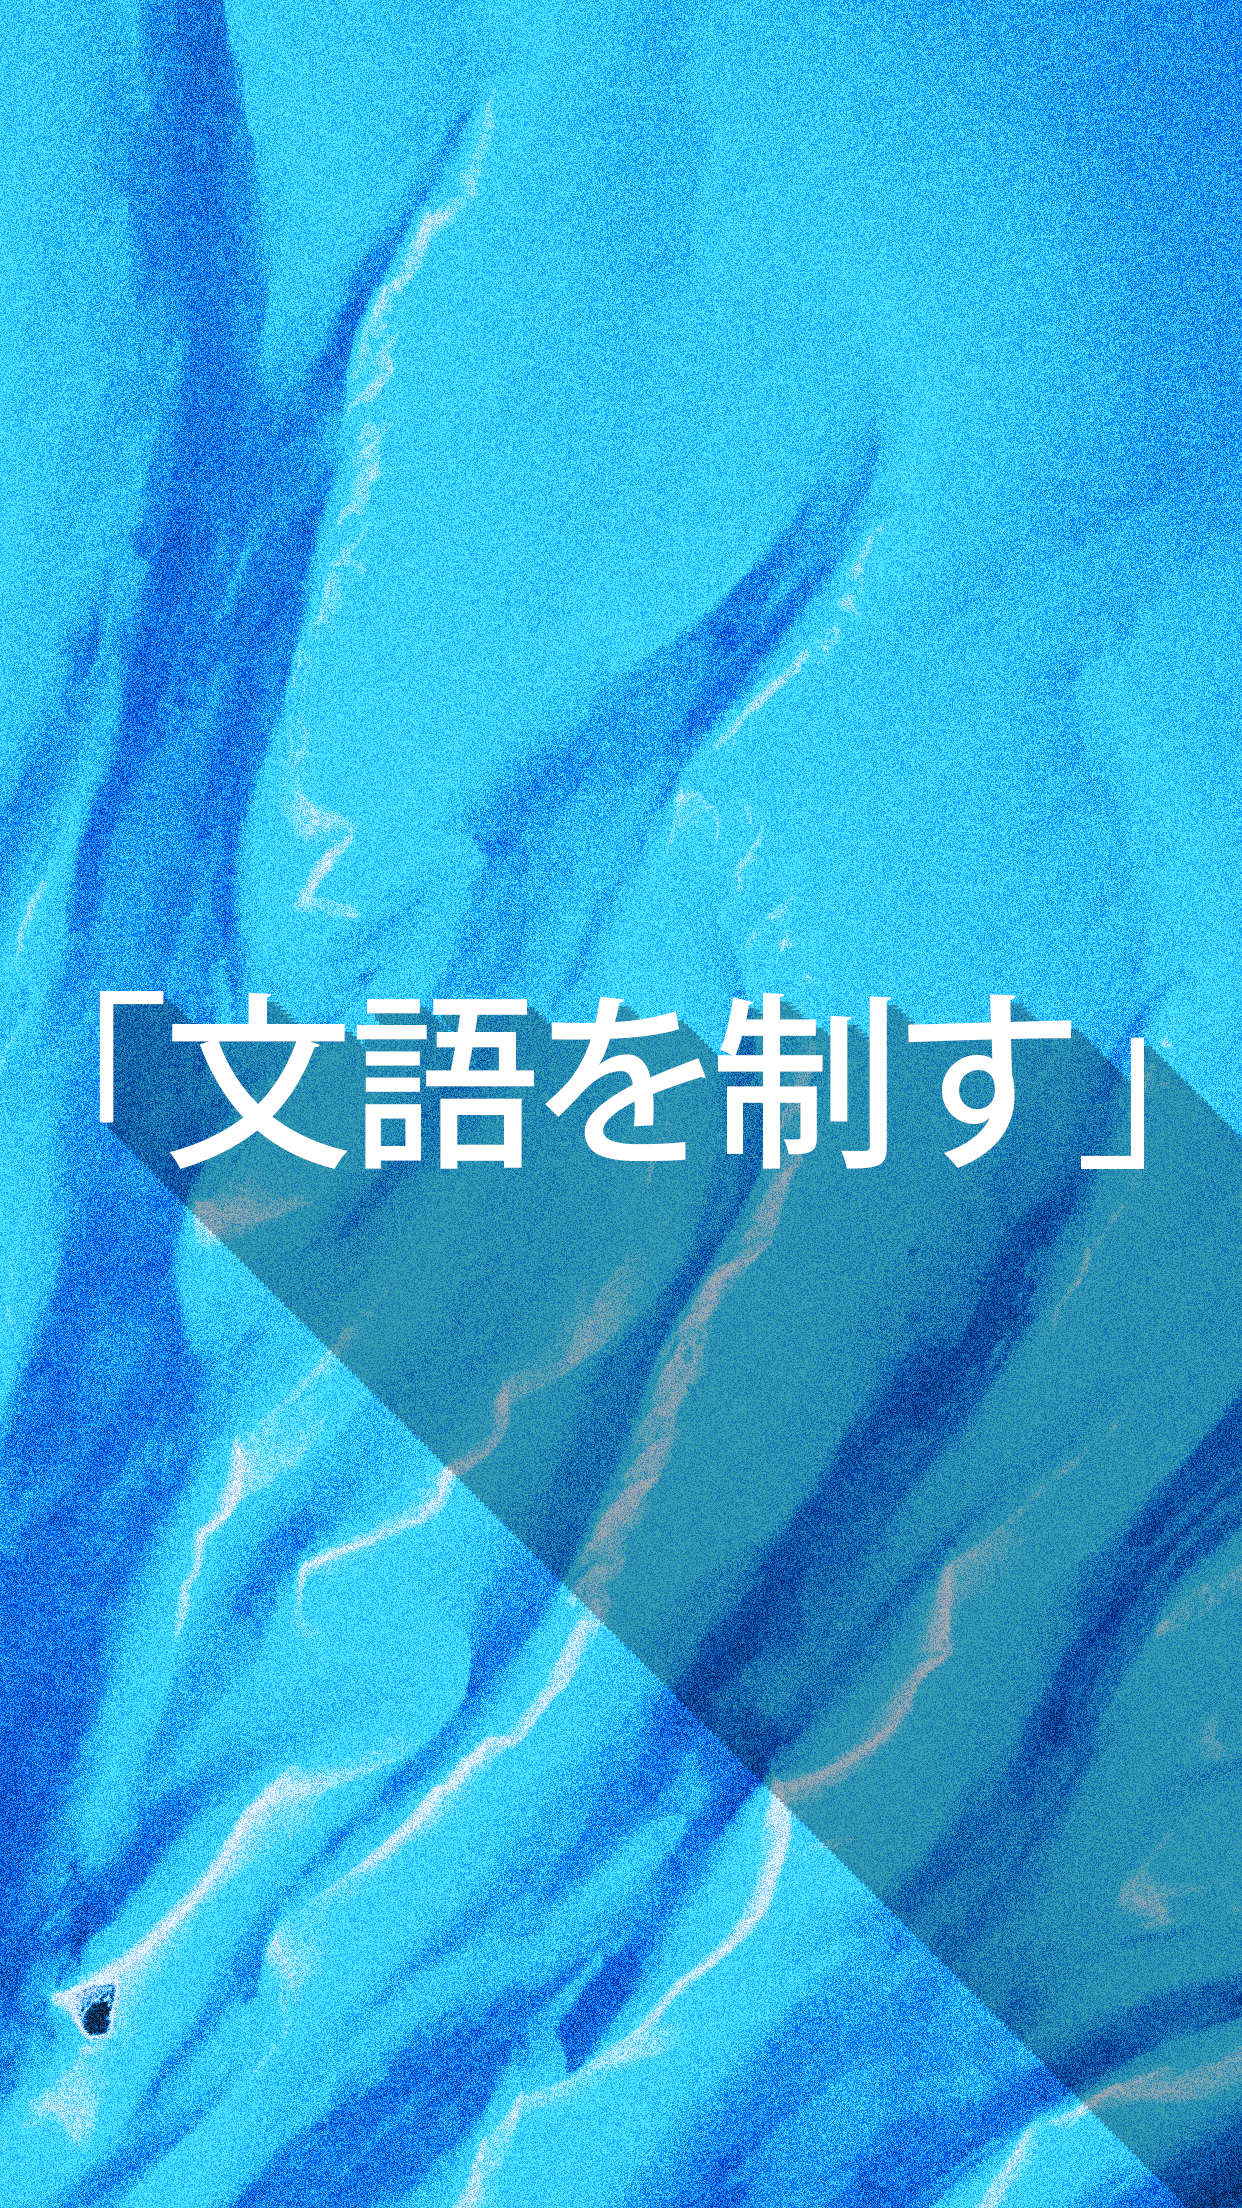 Wallpaper, kanji, Japan, iPhone, blue 1242x2208